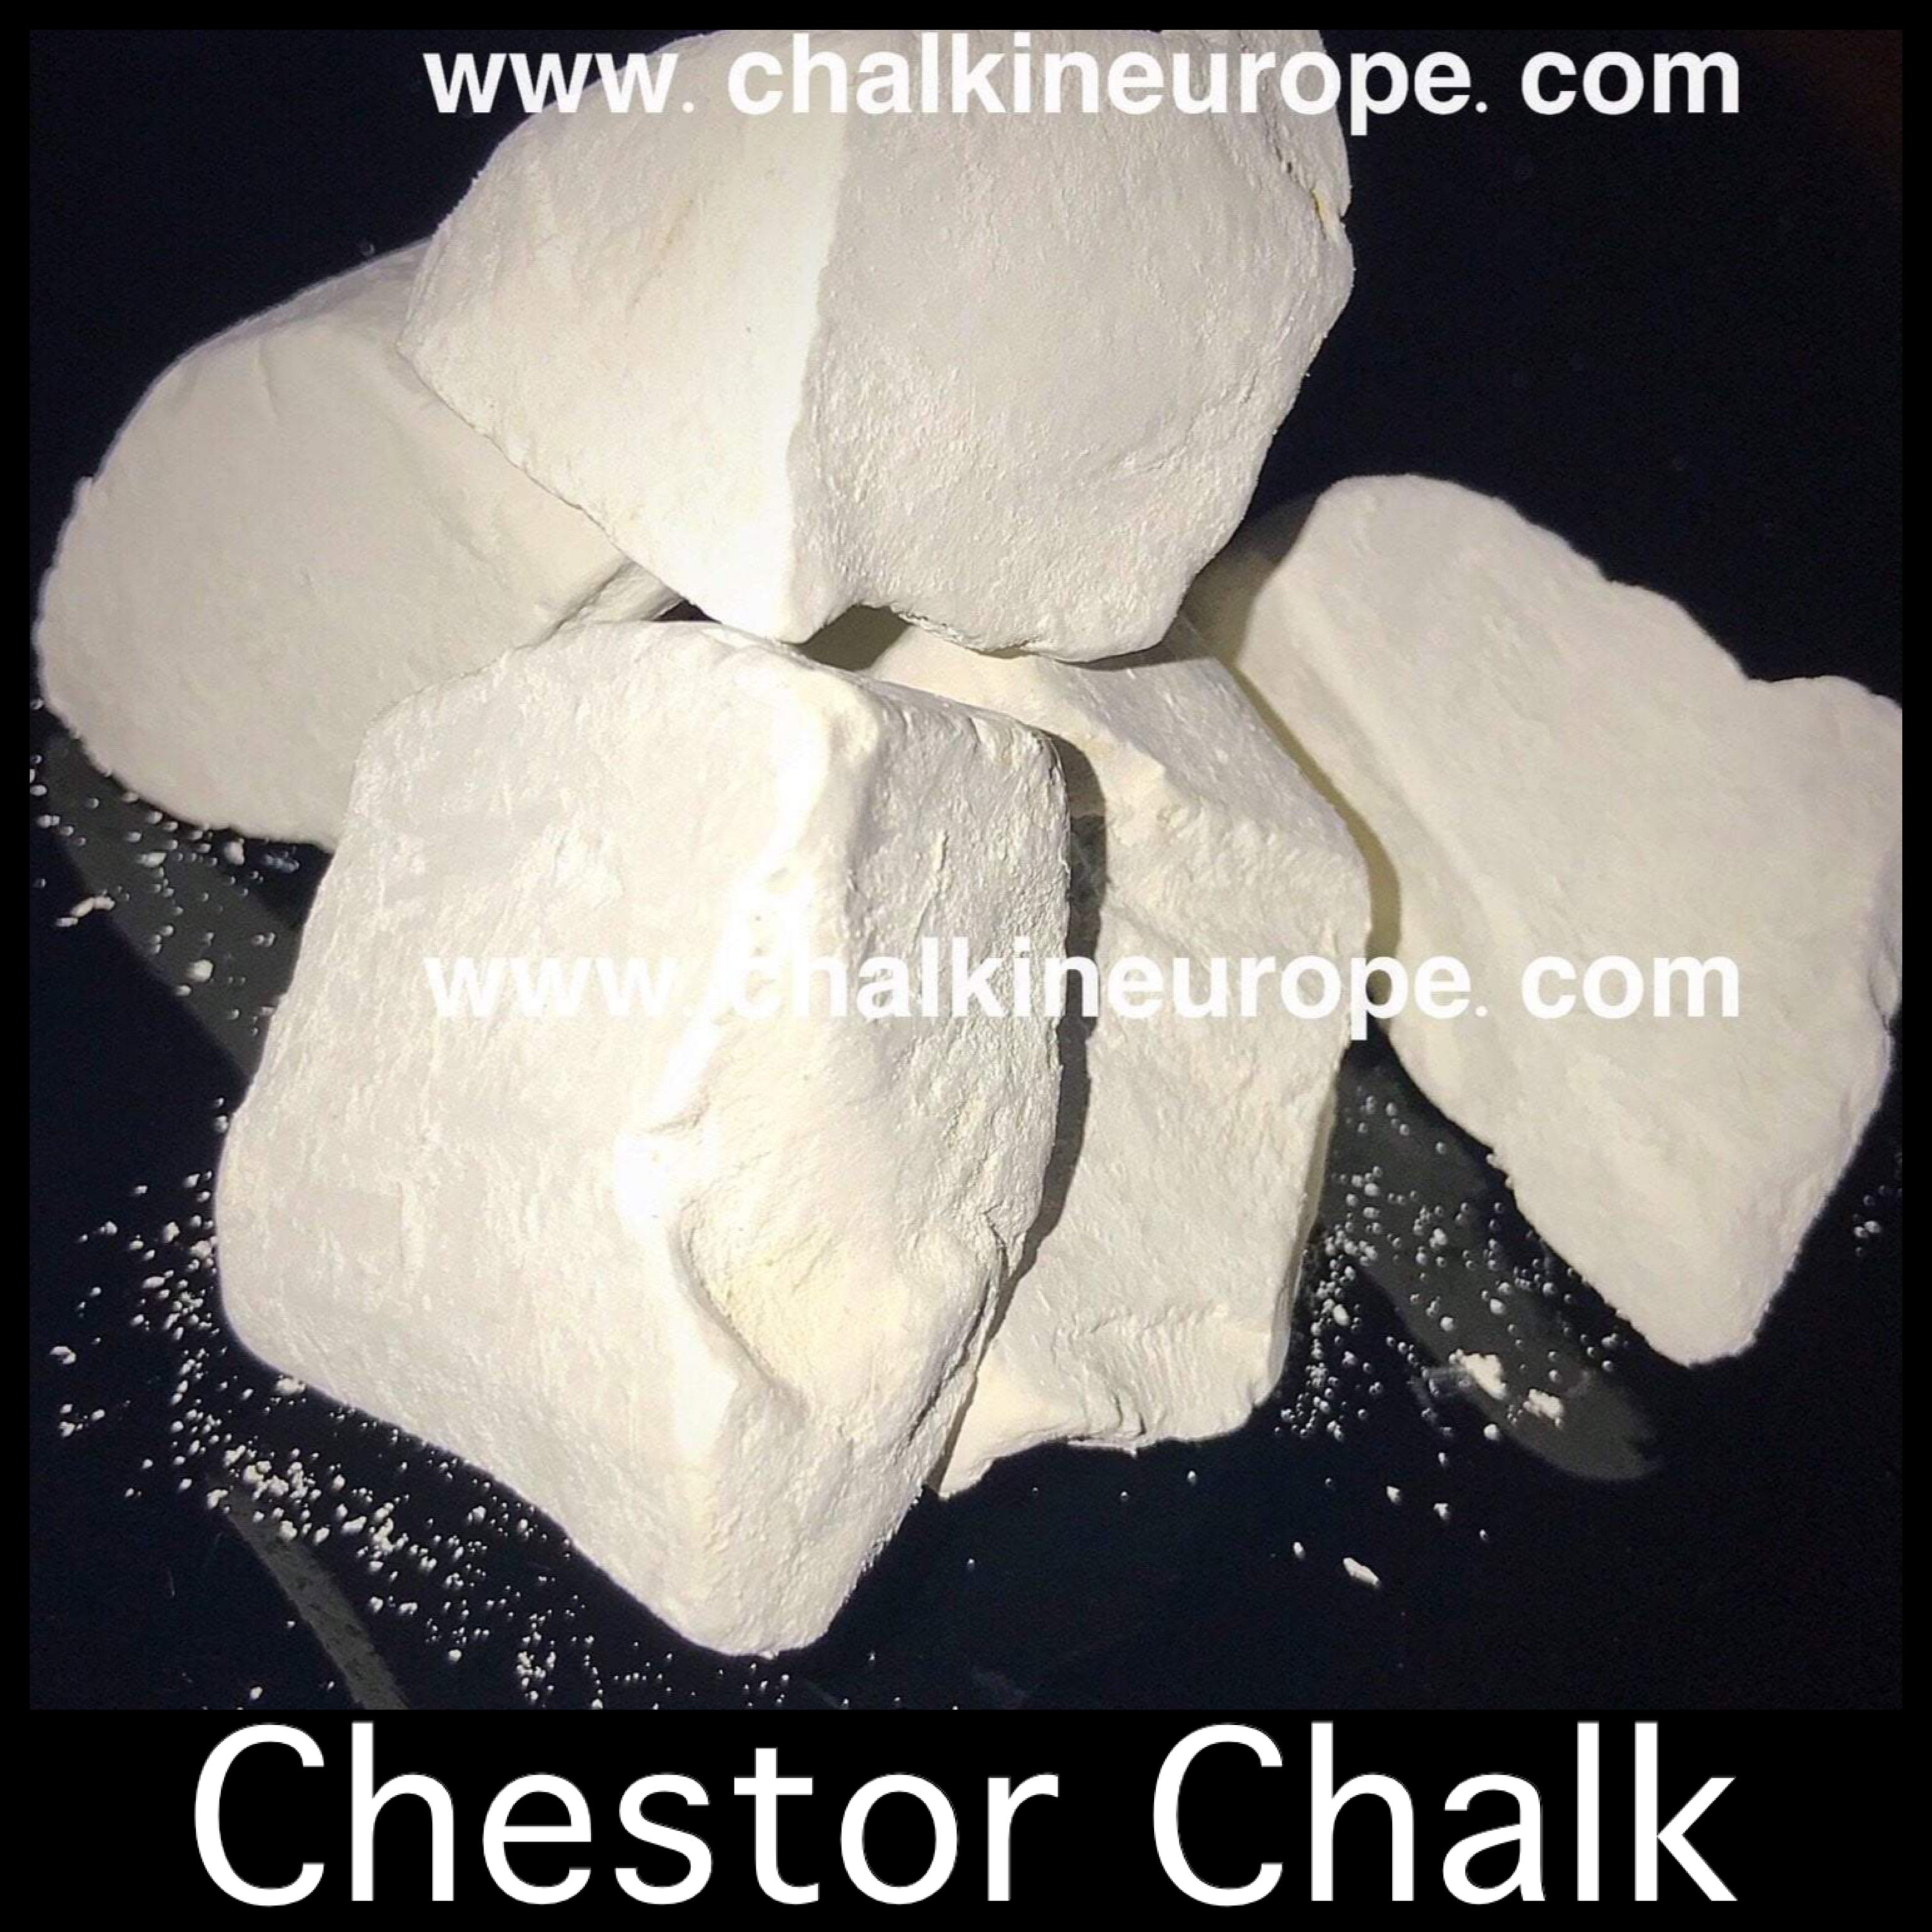 Chestor krīts - Chalkineurope